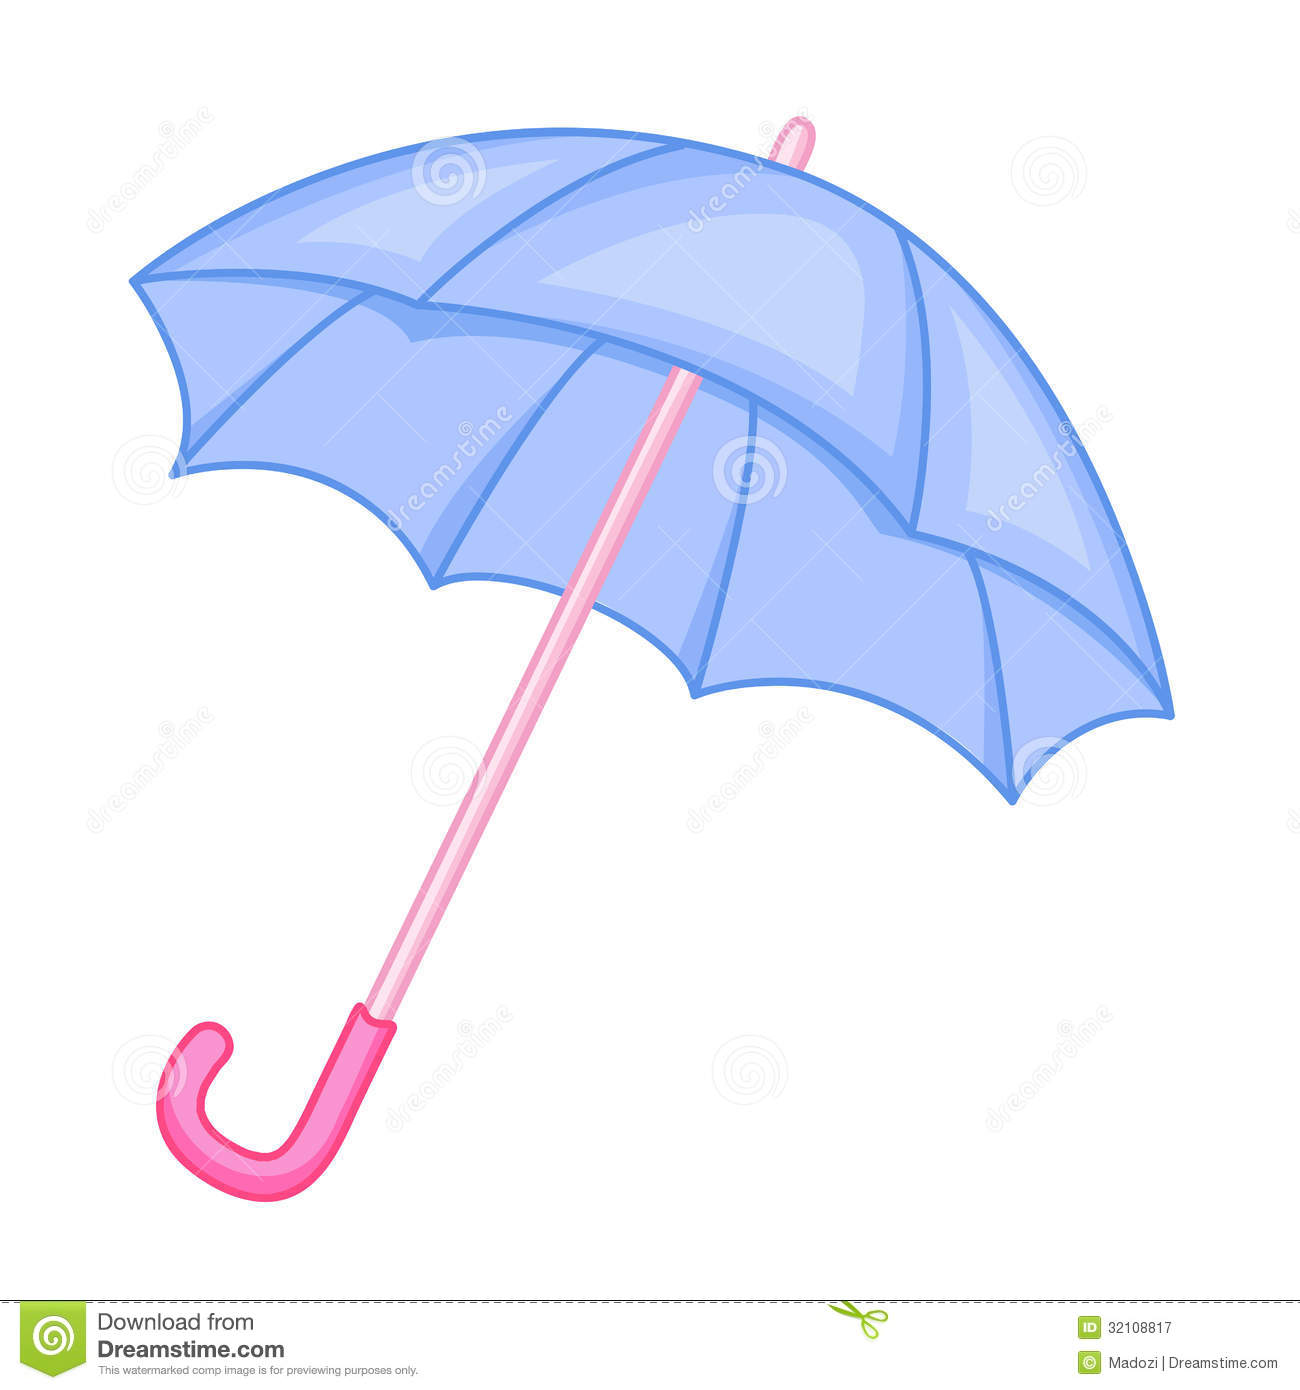 Cute Umbrella Cartoon Royalty Free Stock Photography   Image  32108817